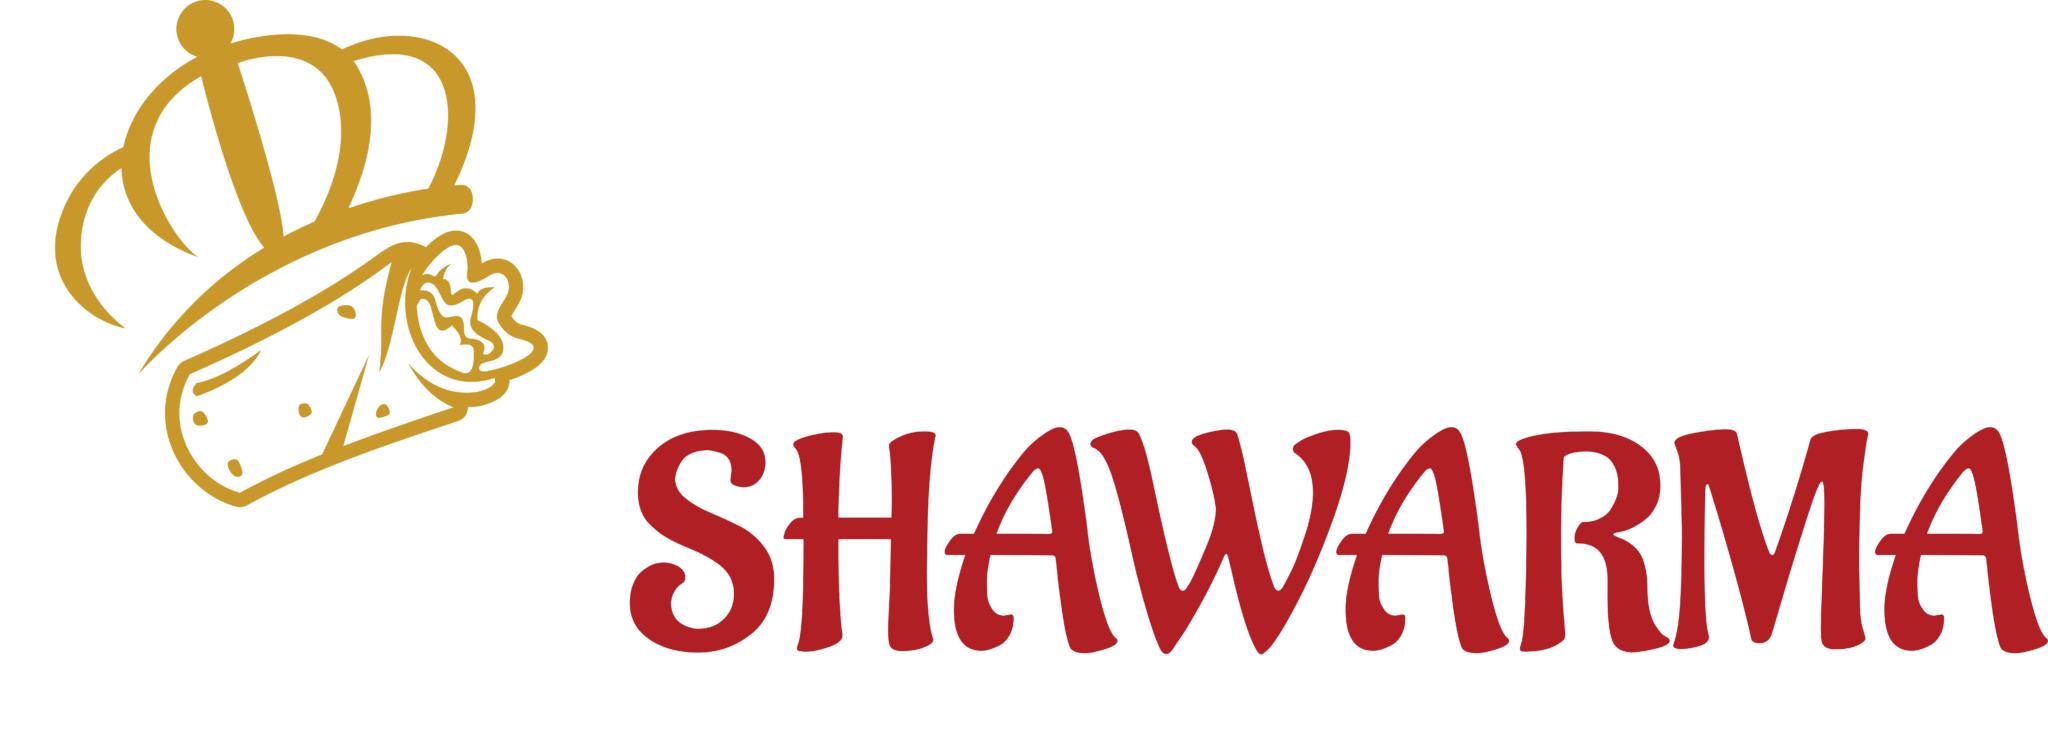 Shawarma logo for restaurants and markets. 4085984 Vector Art at Vecteezy